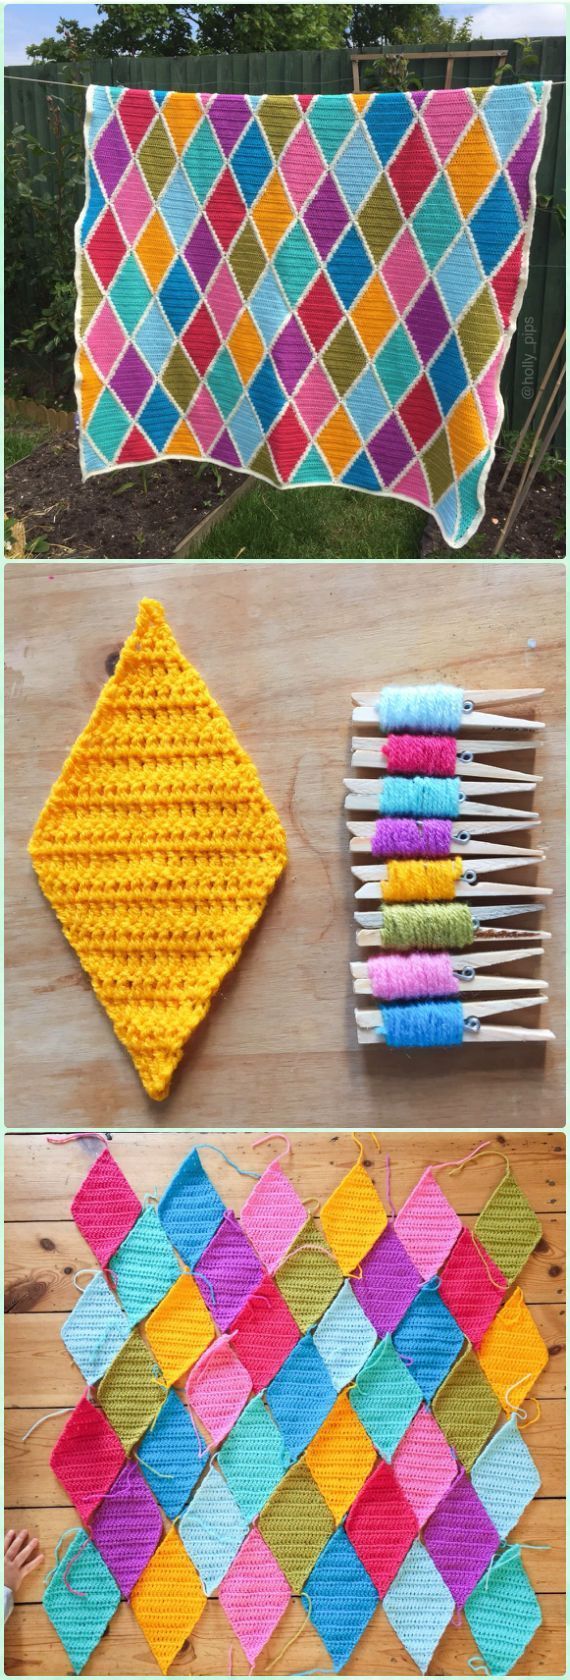 20-Fun-Crochet-Block-Blanket-Free-Patterns.jpg